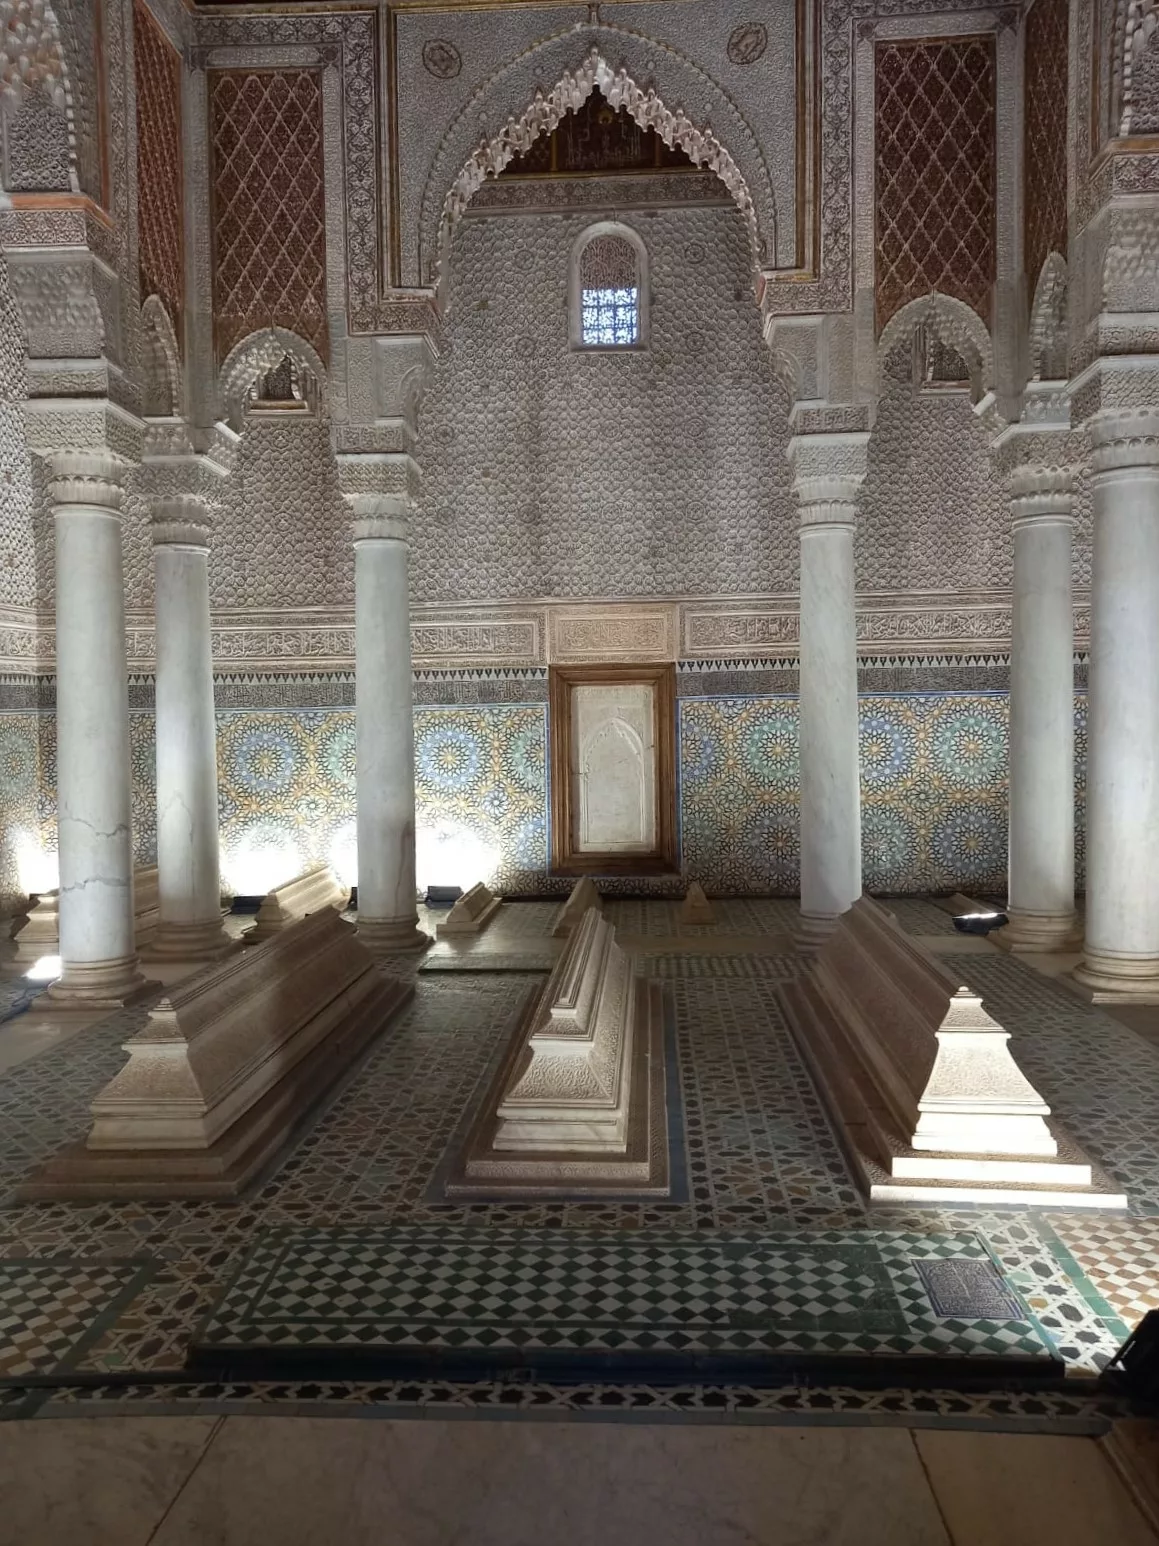 hacer Marrakech: imperdibles